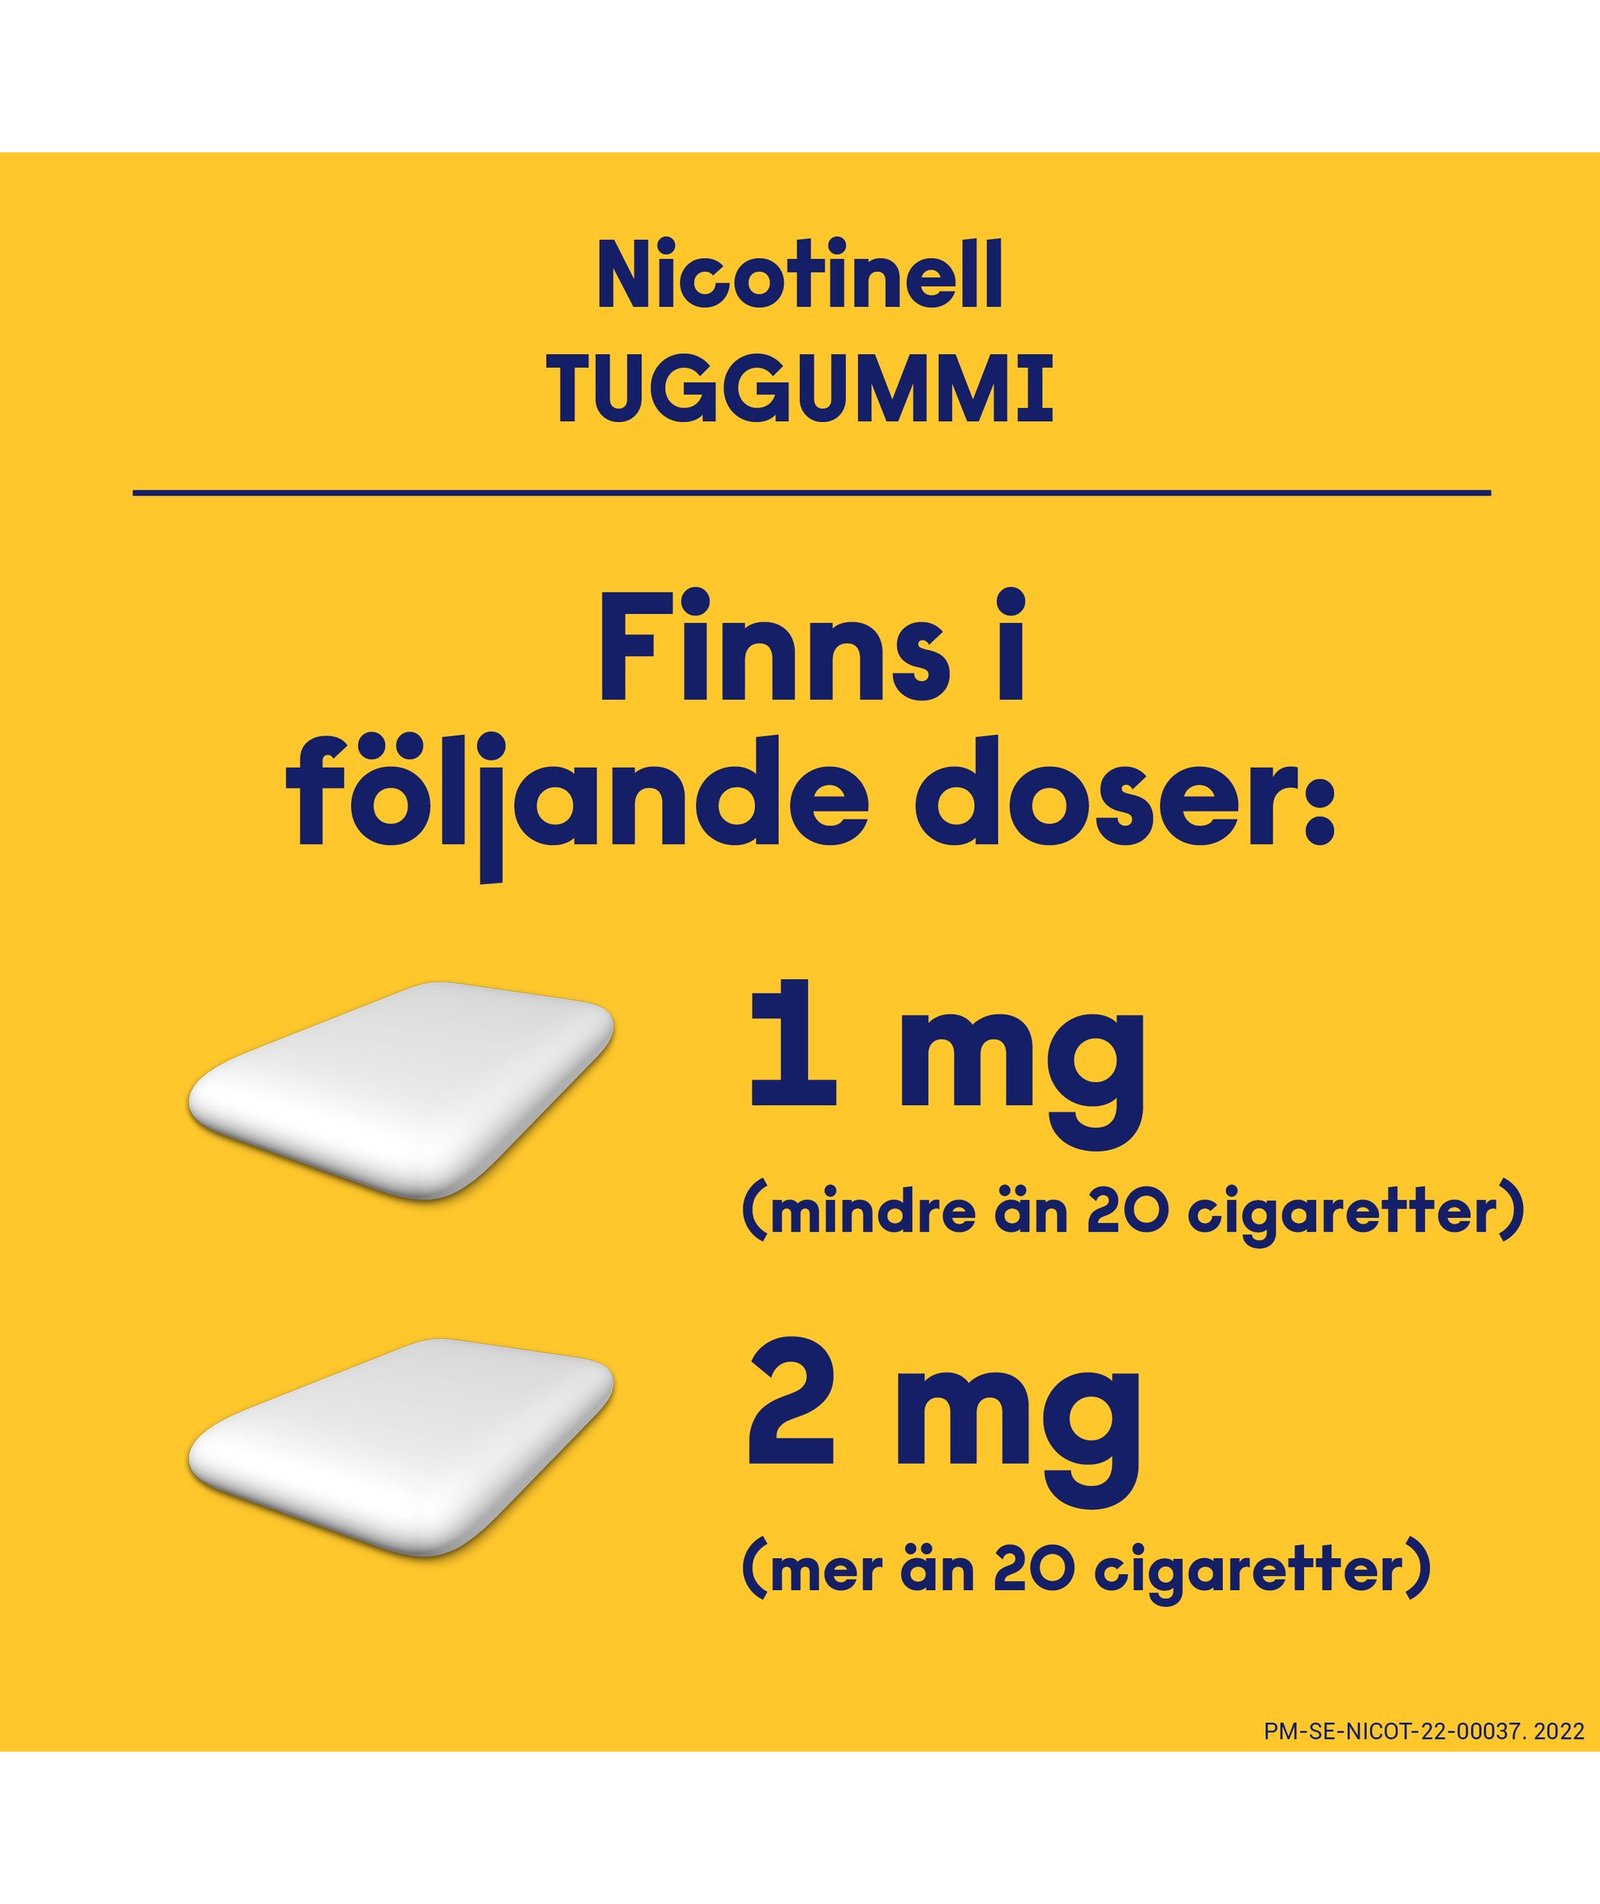 Nicotinell Mint 2 mg Nikotin Medicinska tuggummin 24 st